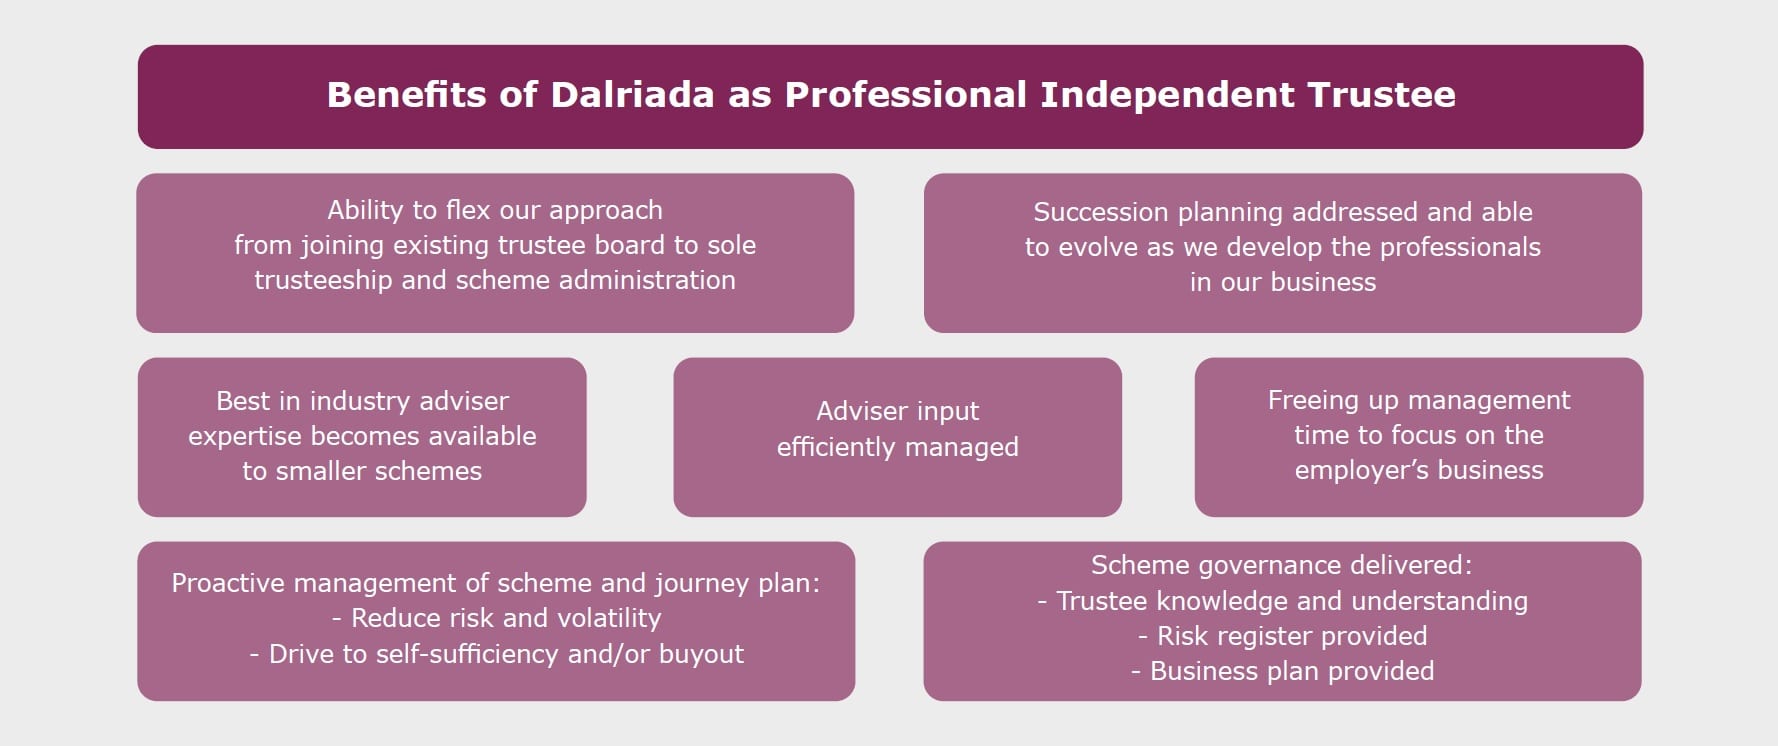 sole trusteeship screenshot displaying benefits of Dalriada trustees